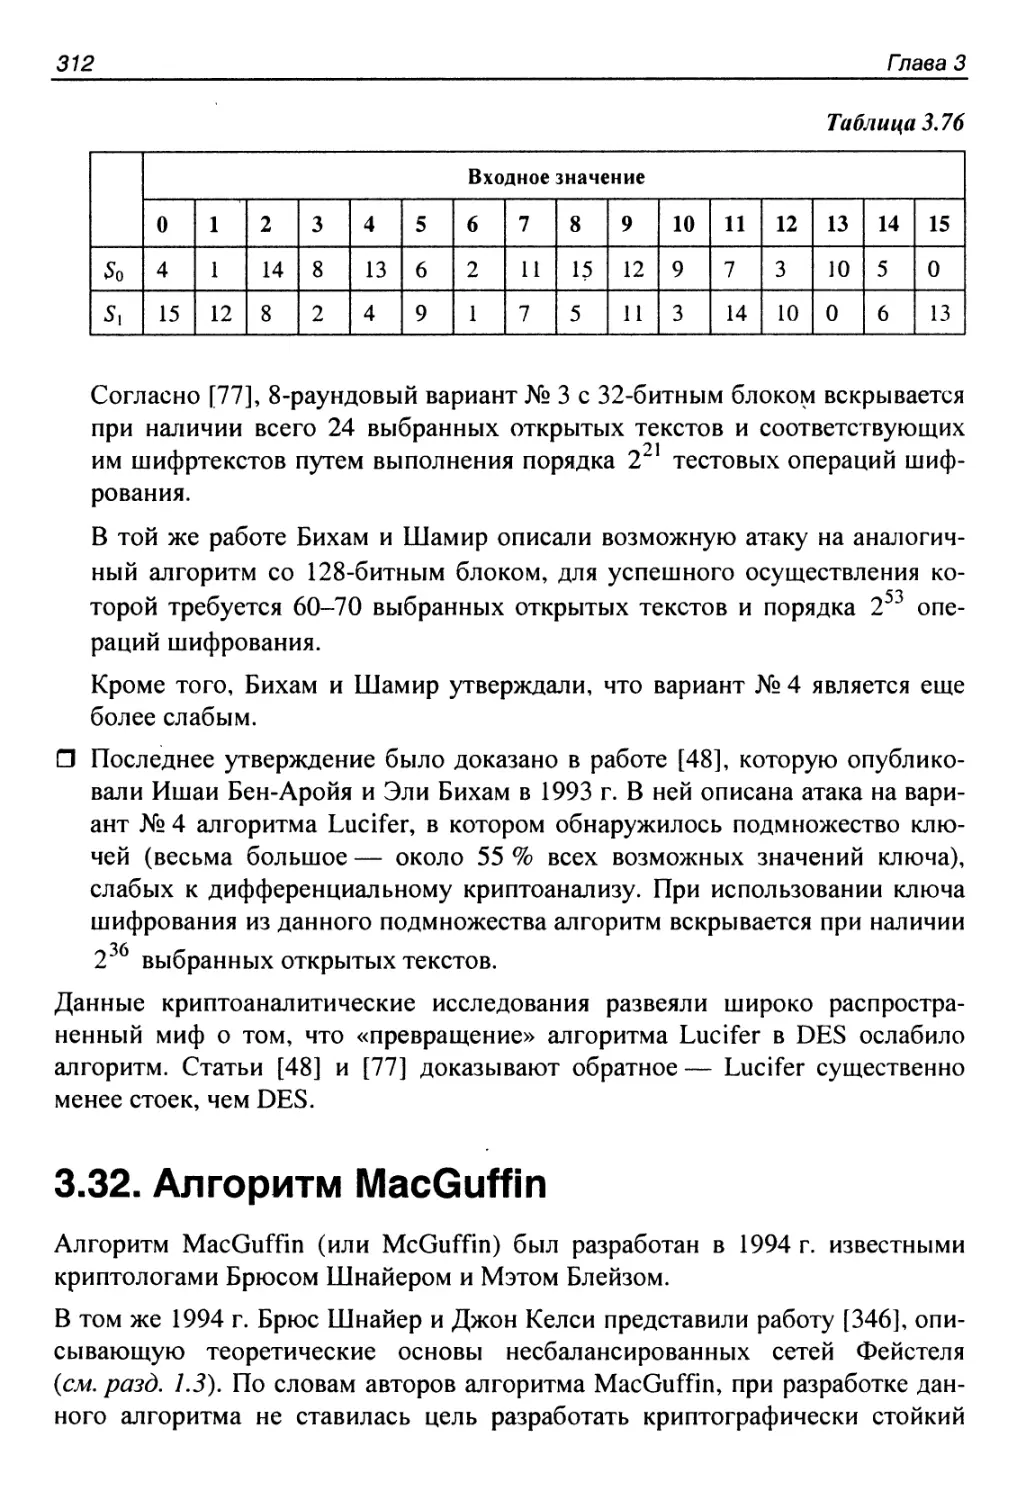 3.32. Алгоритм MacGuffin